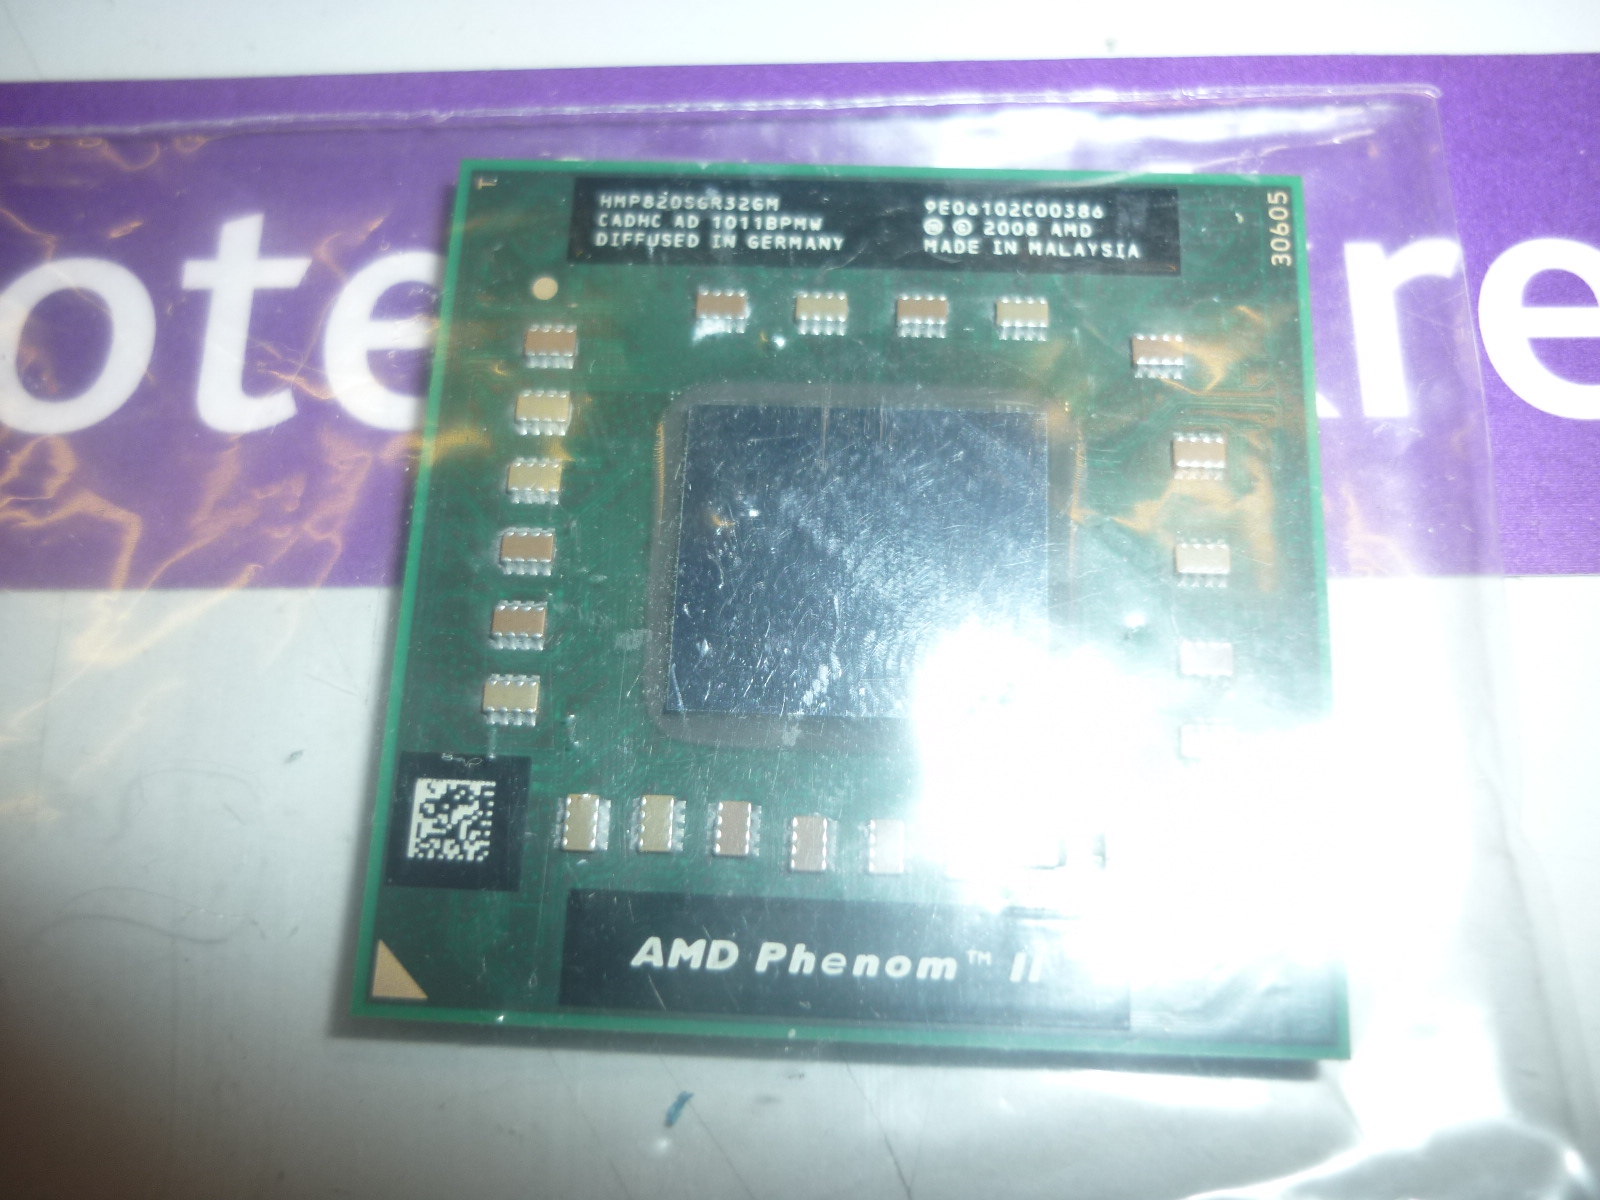 AMD Phenom II Triple Core Mobile P820 1.8 Ghz HMP820SGR